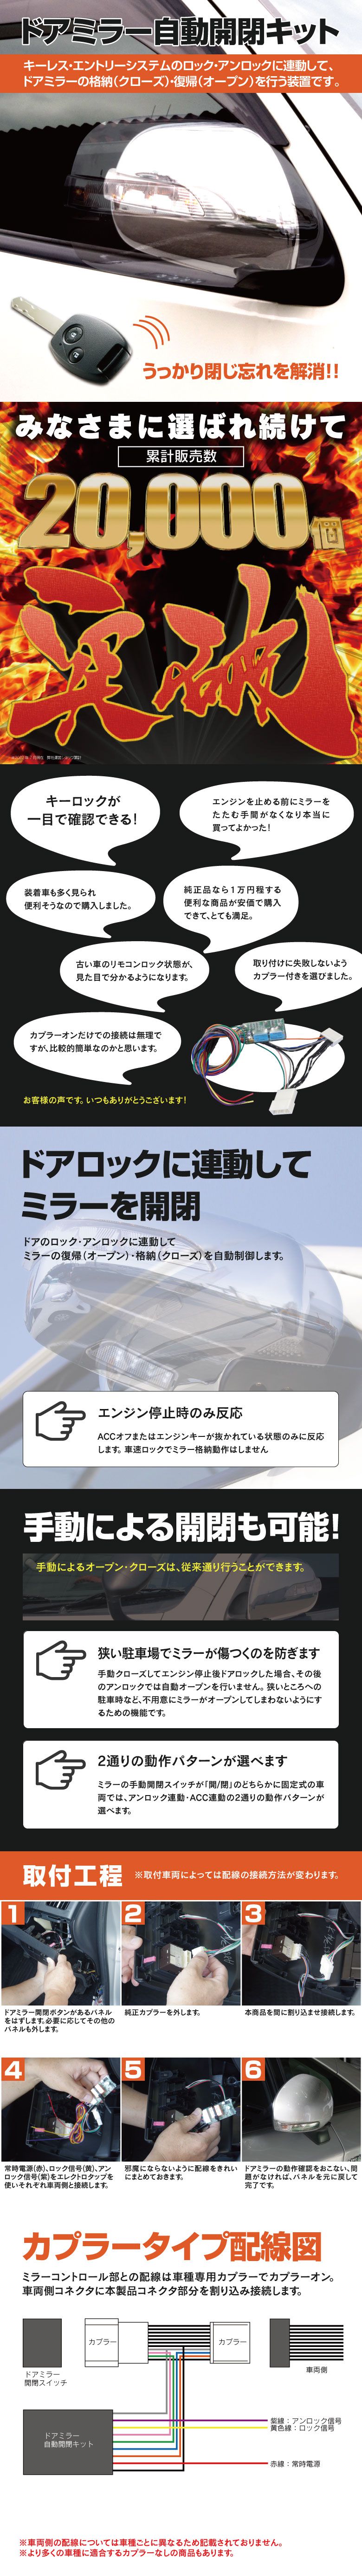 HONDA ホンダ FIT フィット 純正 ドアバイザー エアロデザインタイプ 2012.05〜2012.12